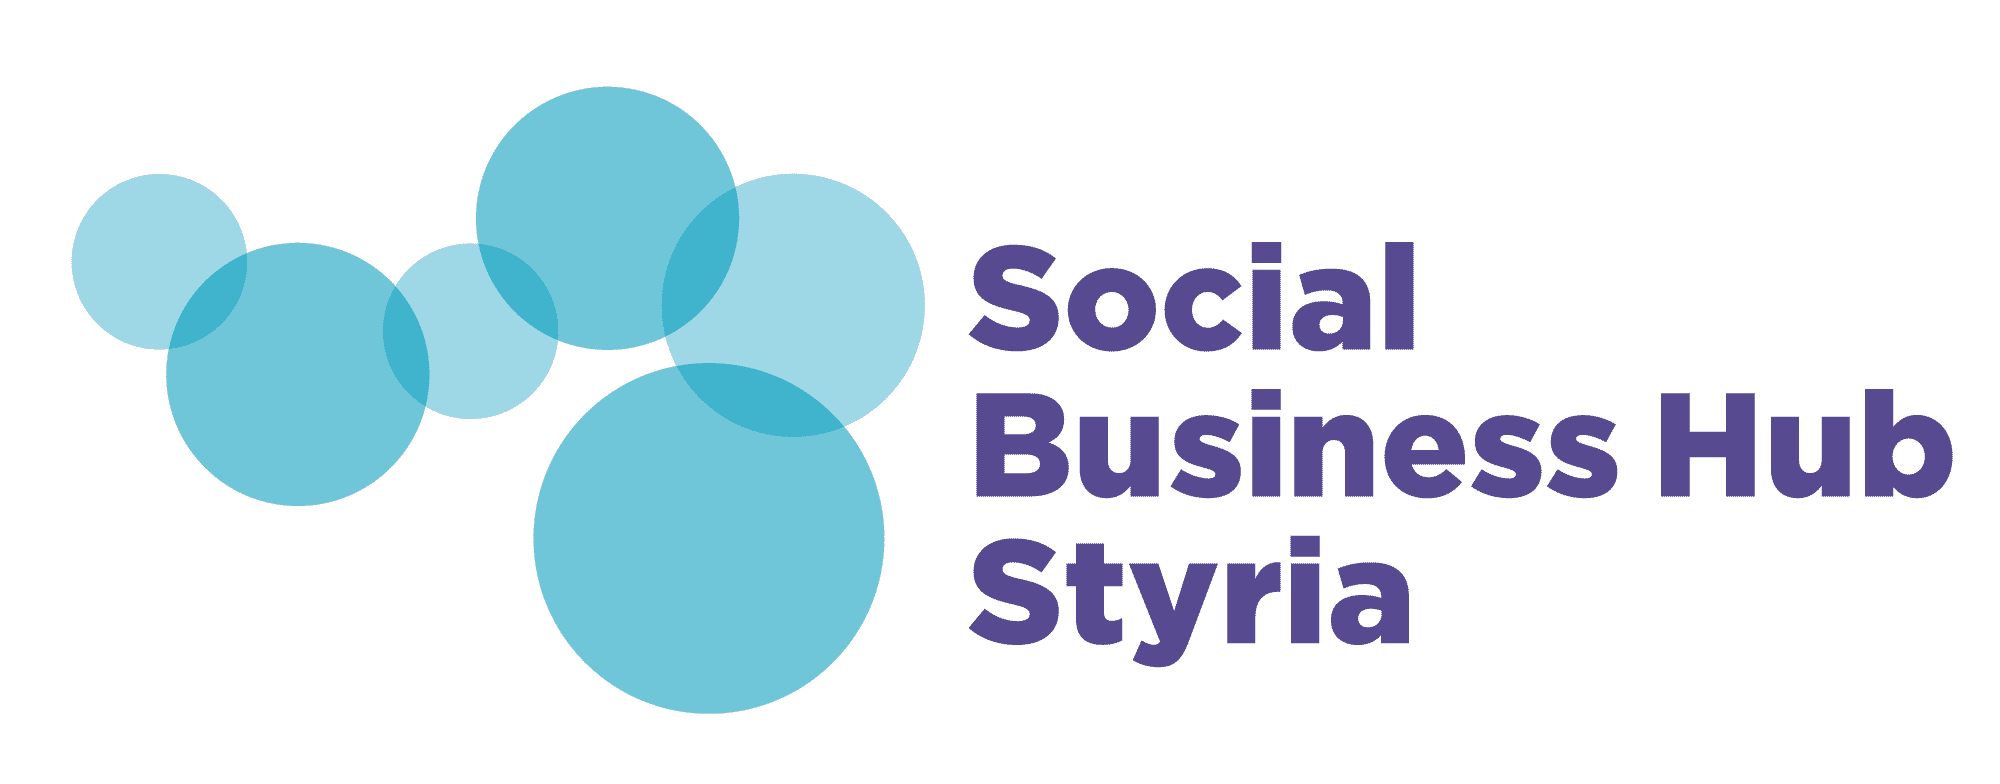 Social Business Hub